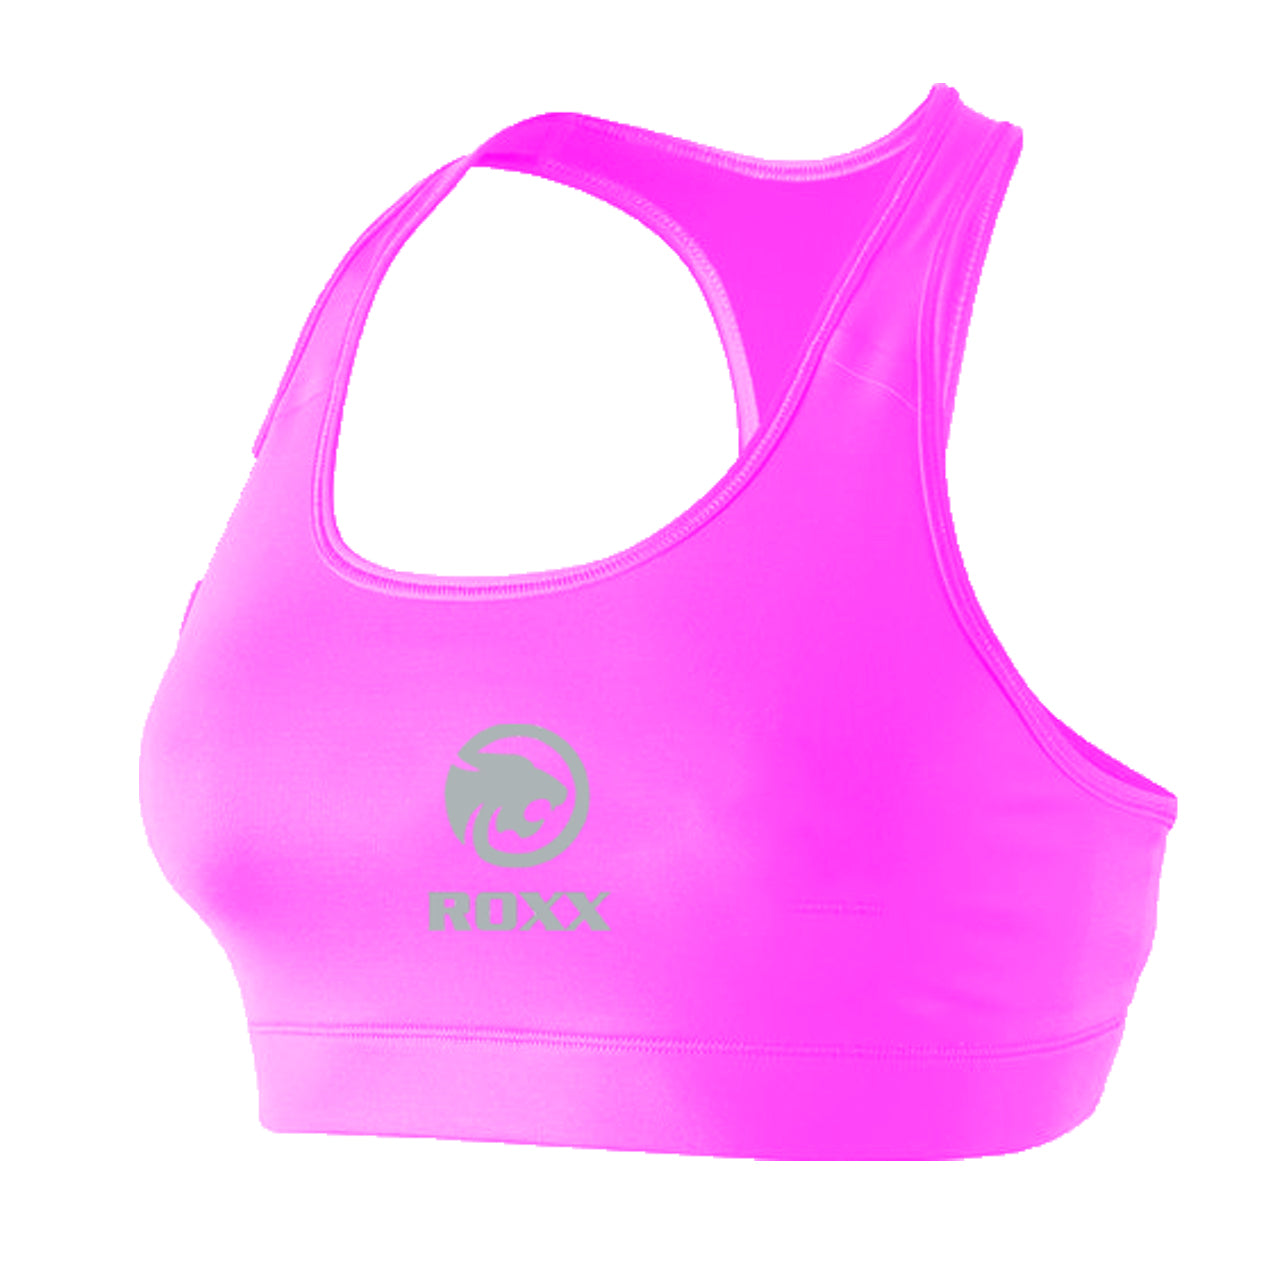 ROXX Womens Sports Bras Cyling Running Sleep Yoga Leisure Soft Stretch Tops